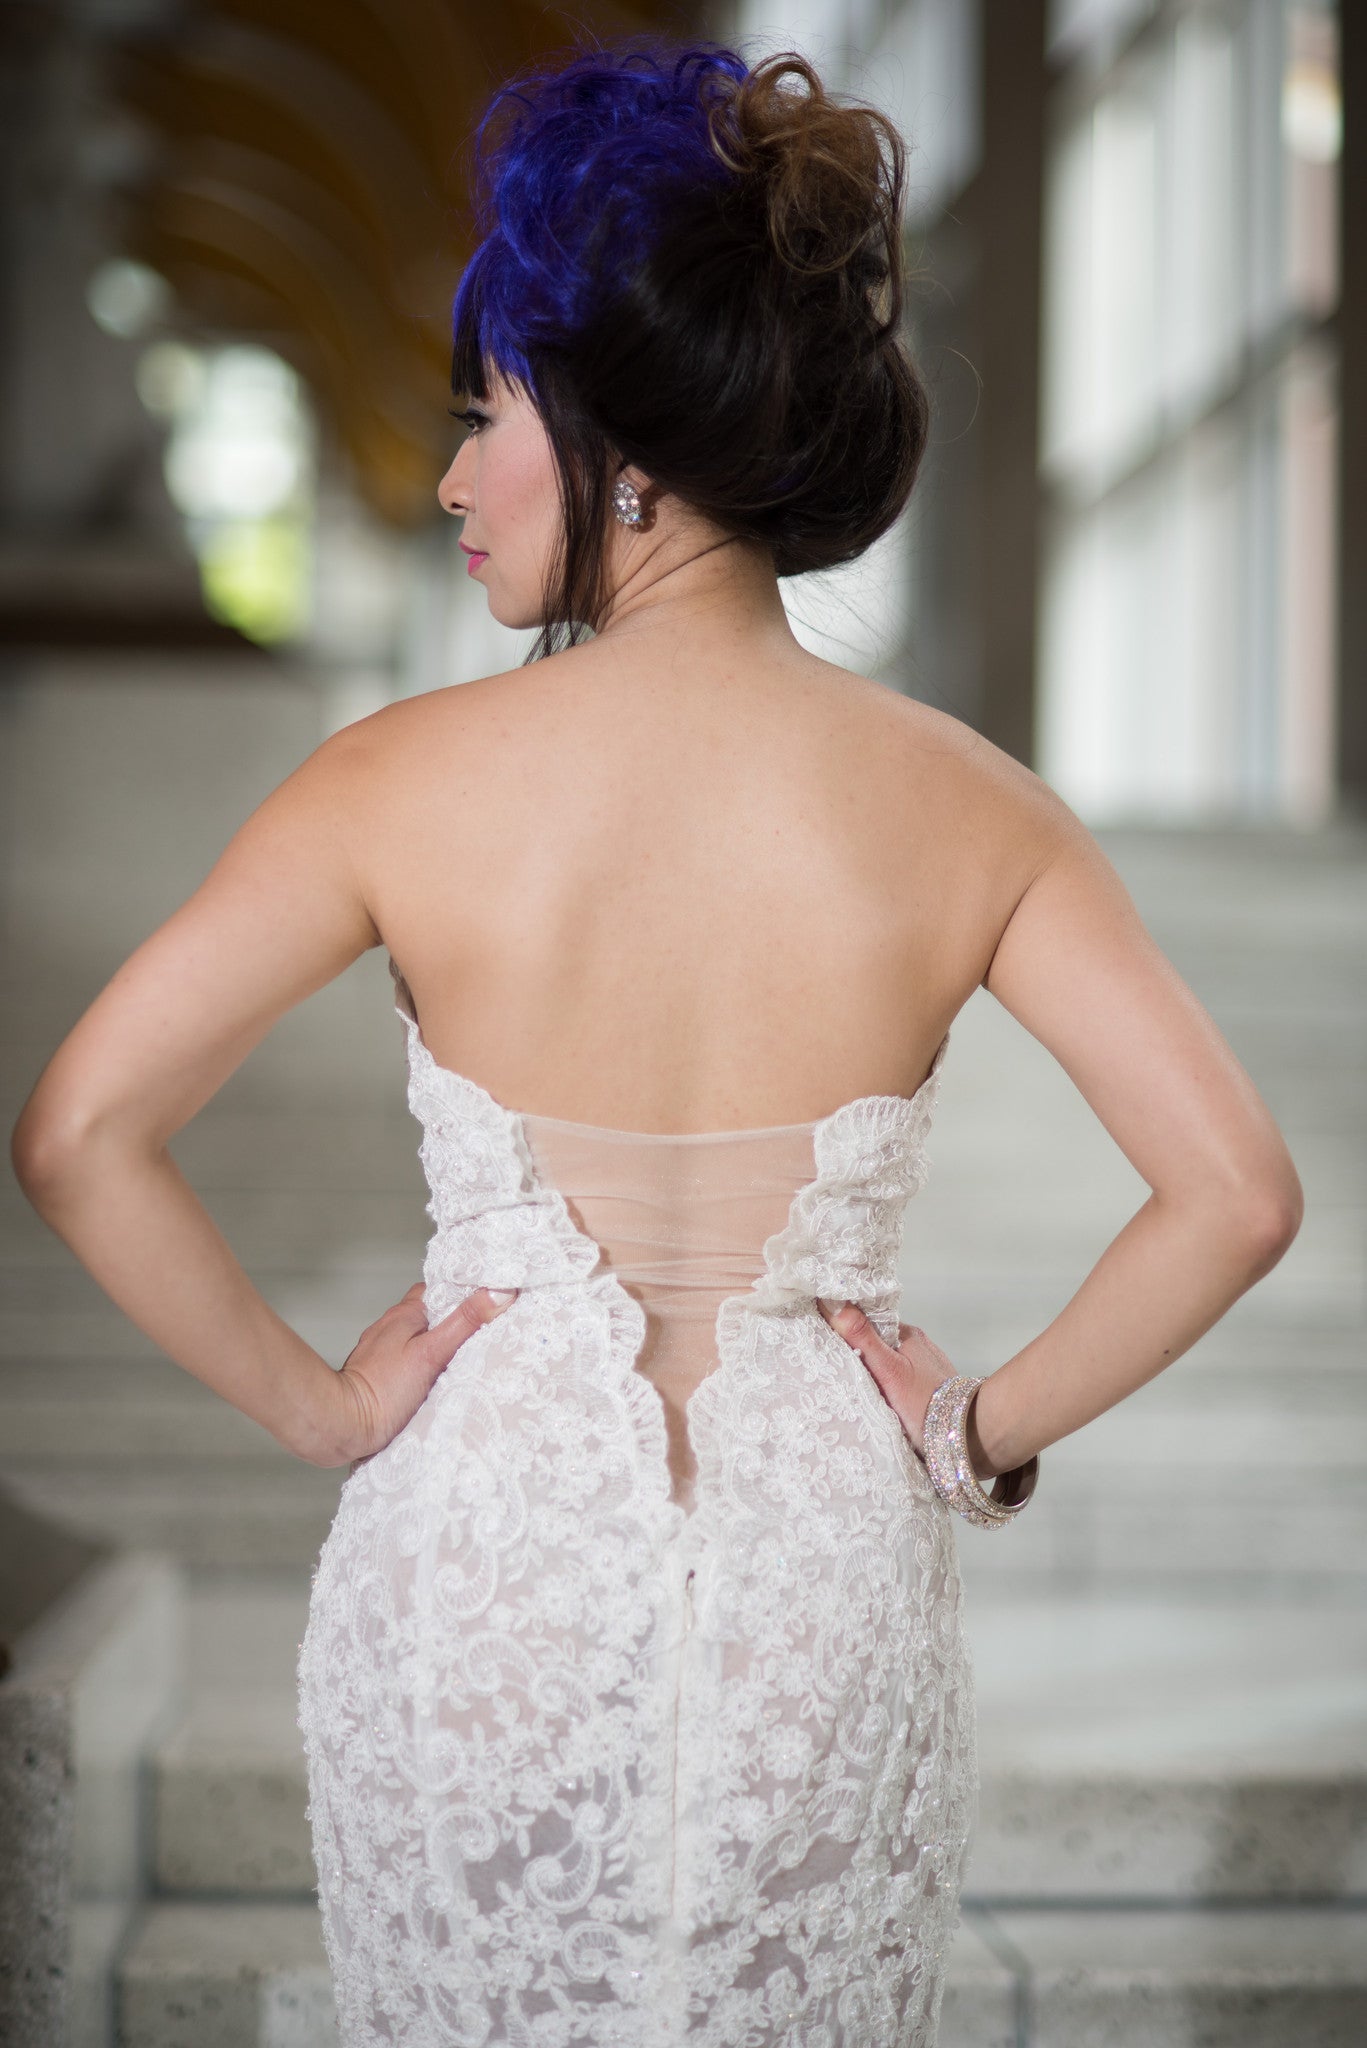 Lace Wedding Dress with High Slit (#Juliet)